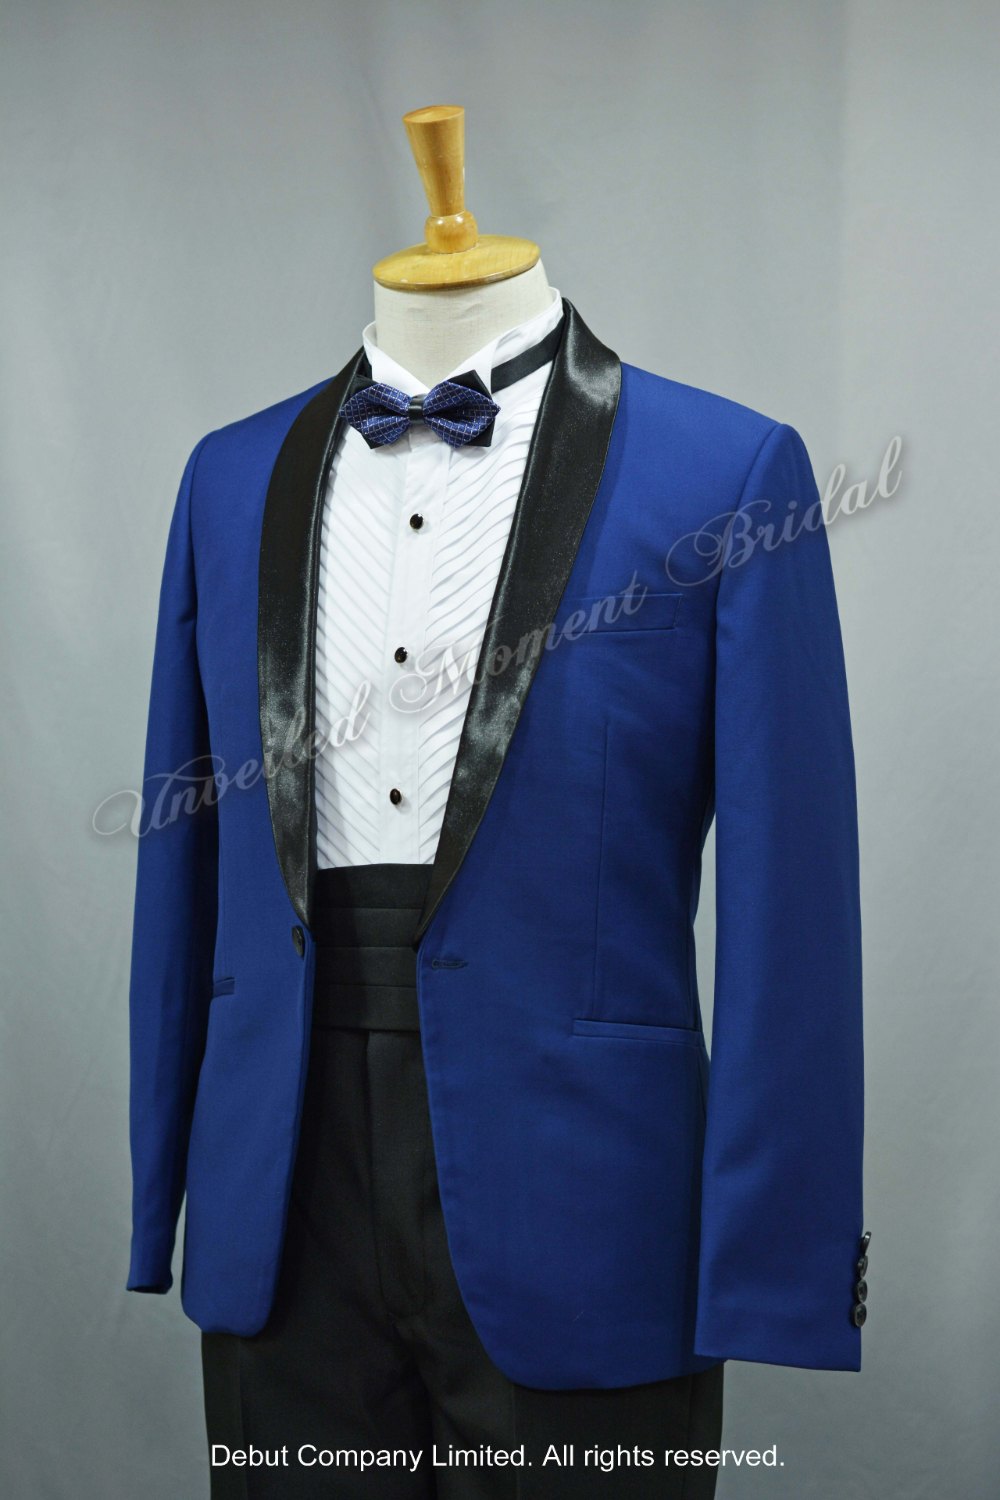 Blue suit-style tuxedo with black Trim Collar , matched with black cummerbund and blue bow 藍色格仔領結bow tie, 黑色腰封, 黑色披肩領藍色西裝款新郎禮服